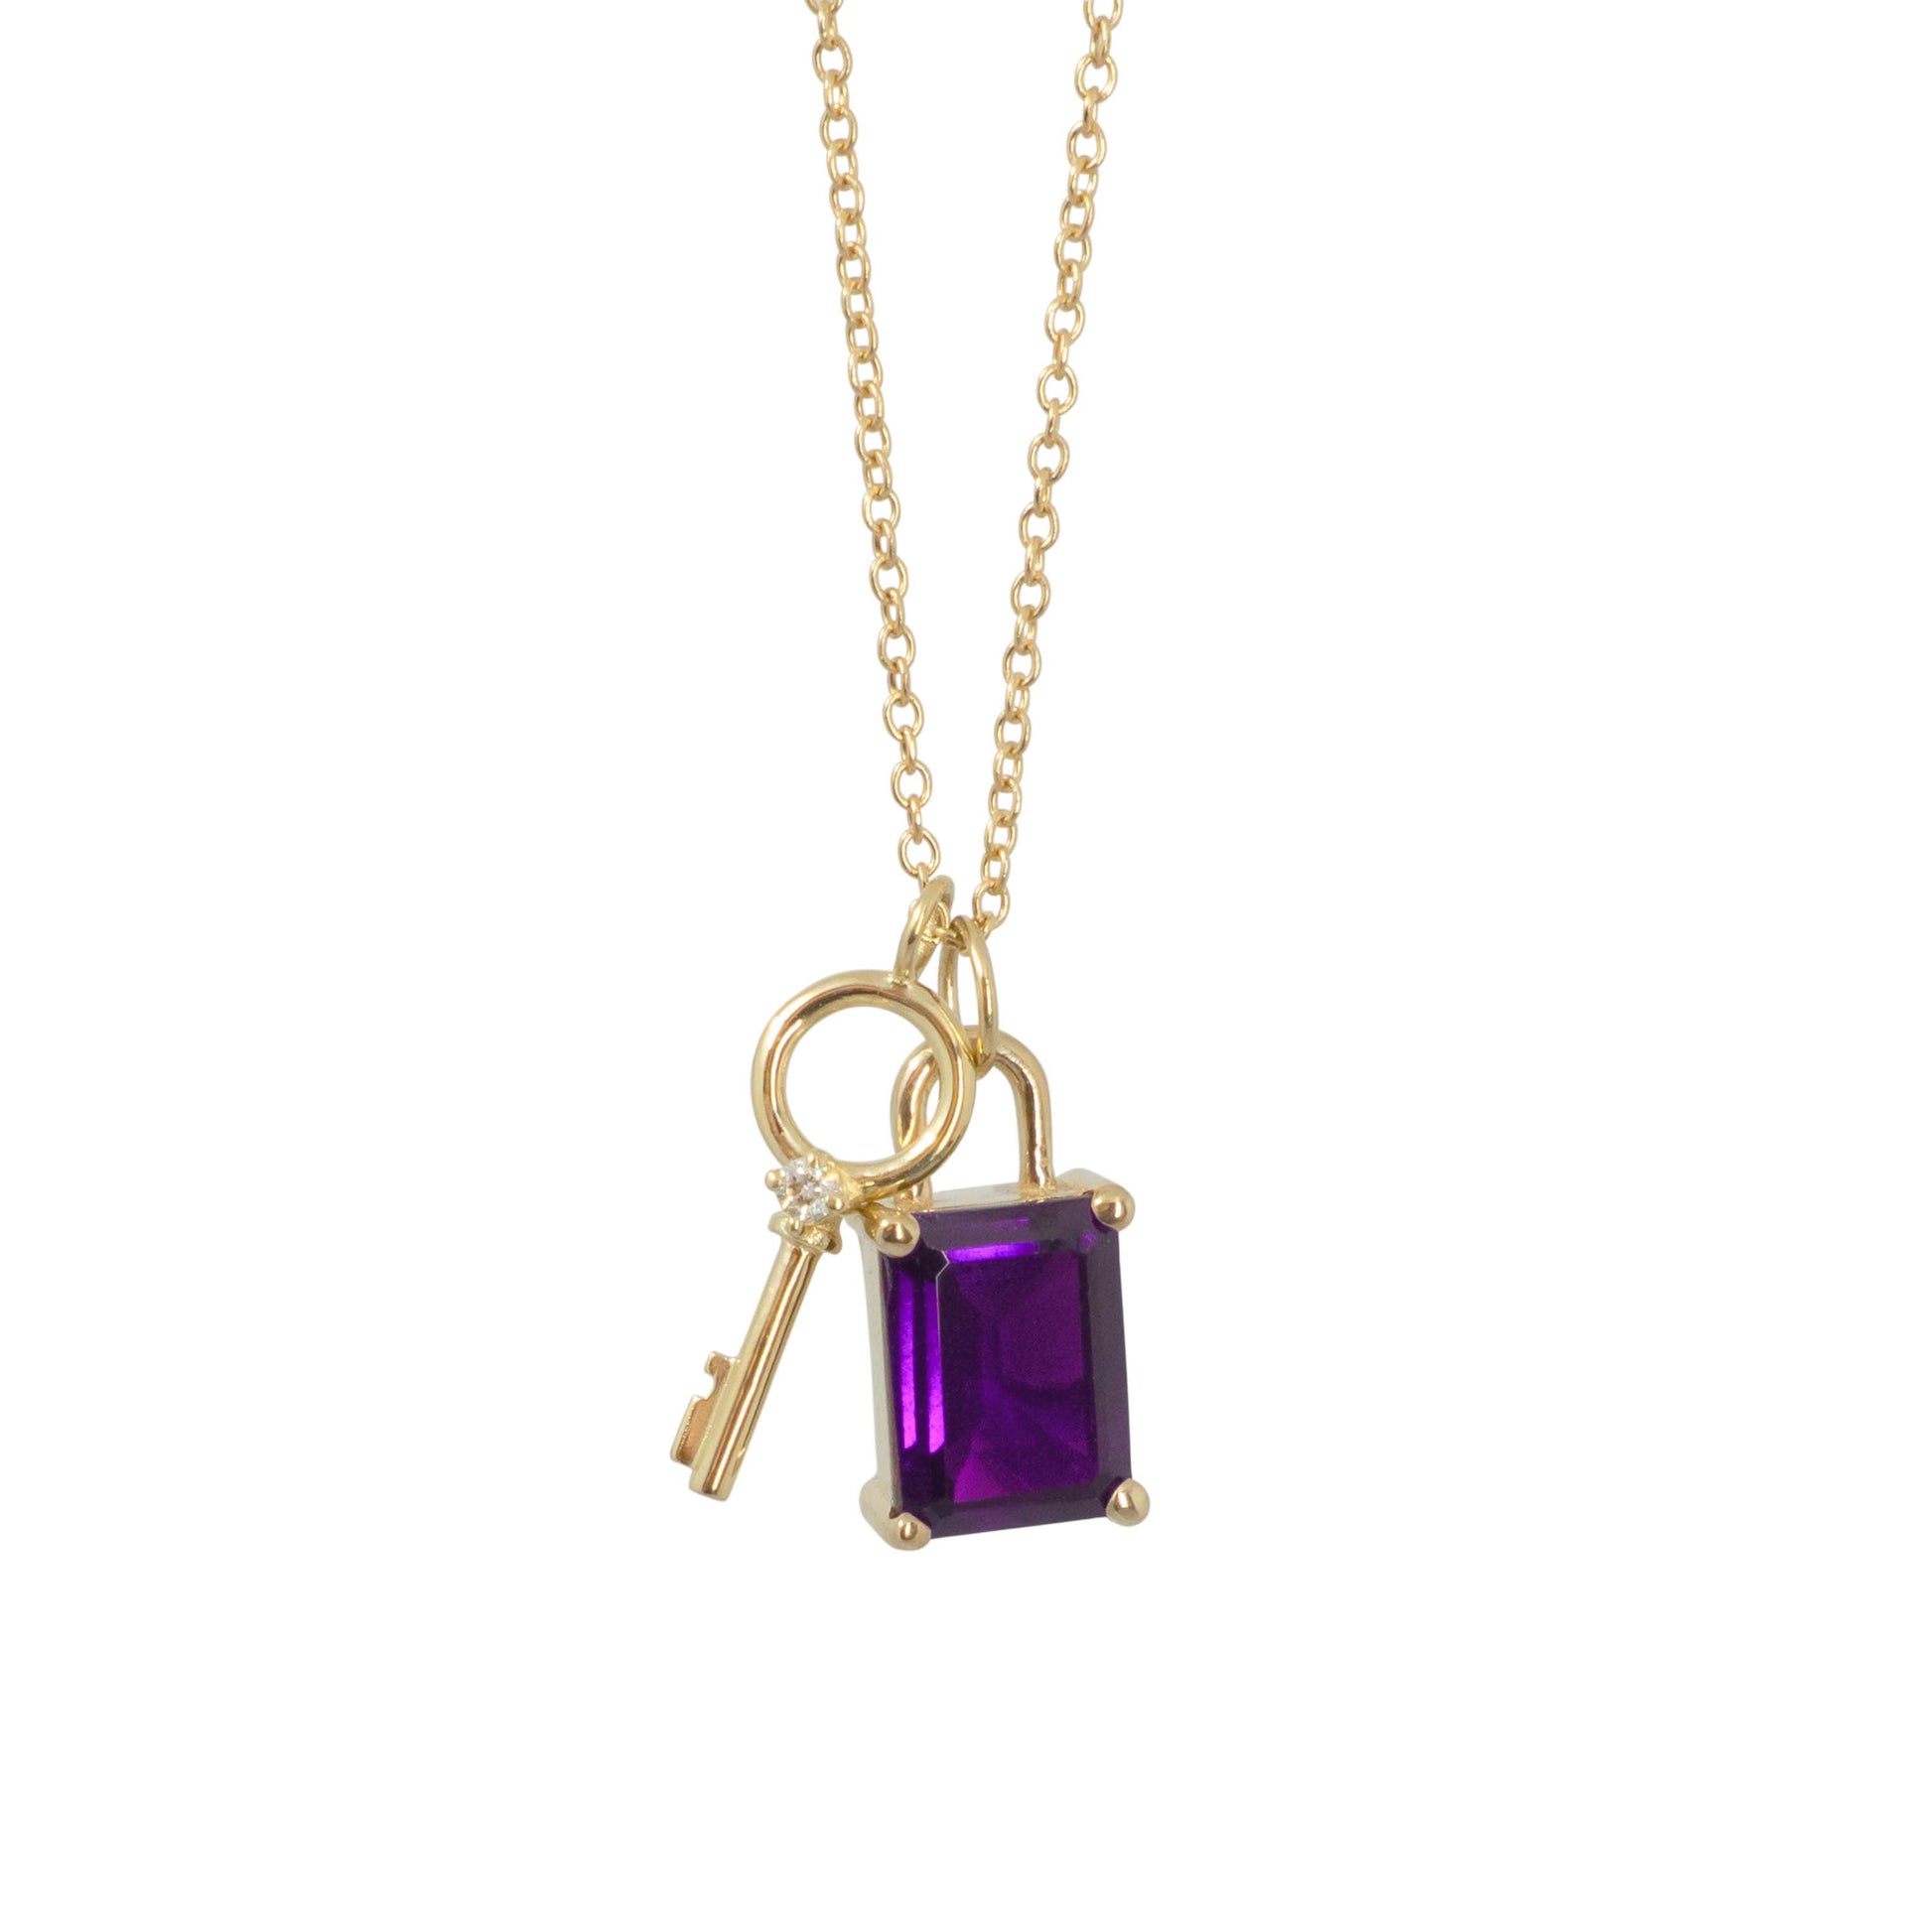 Diamond Padlock Necklace / 14k Gold / Two Tone Gold Pendant / 